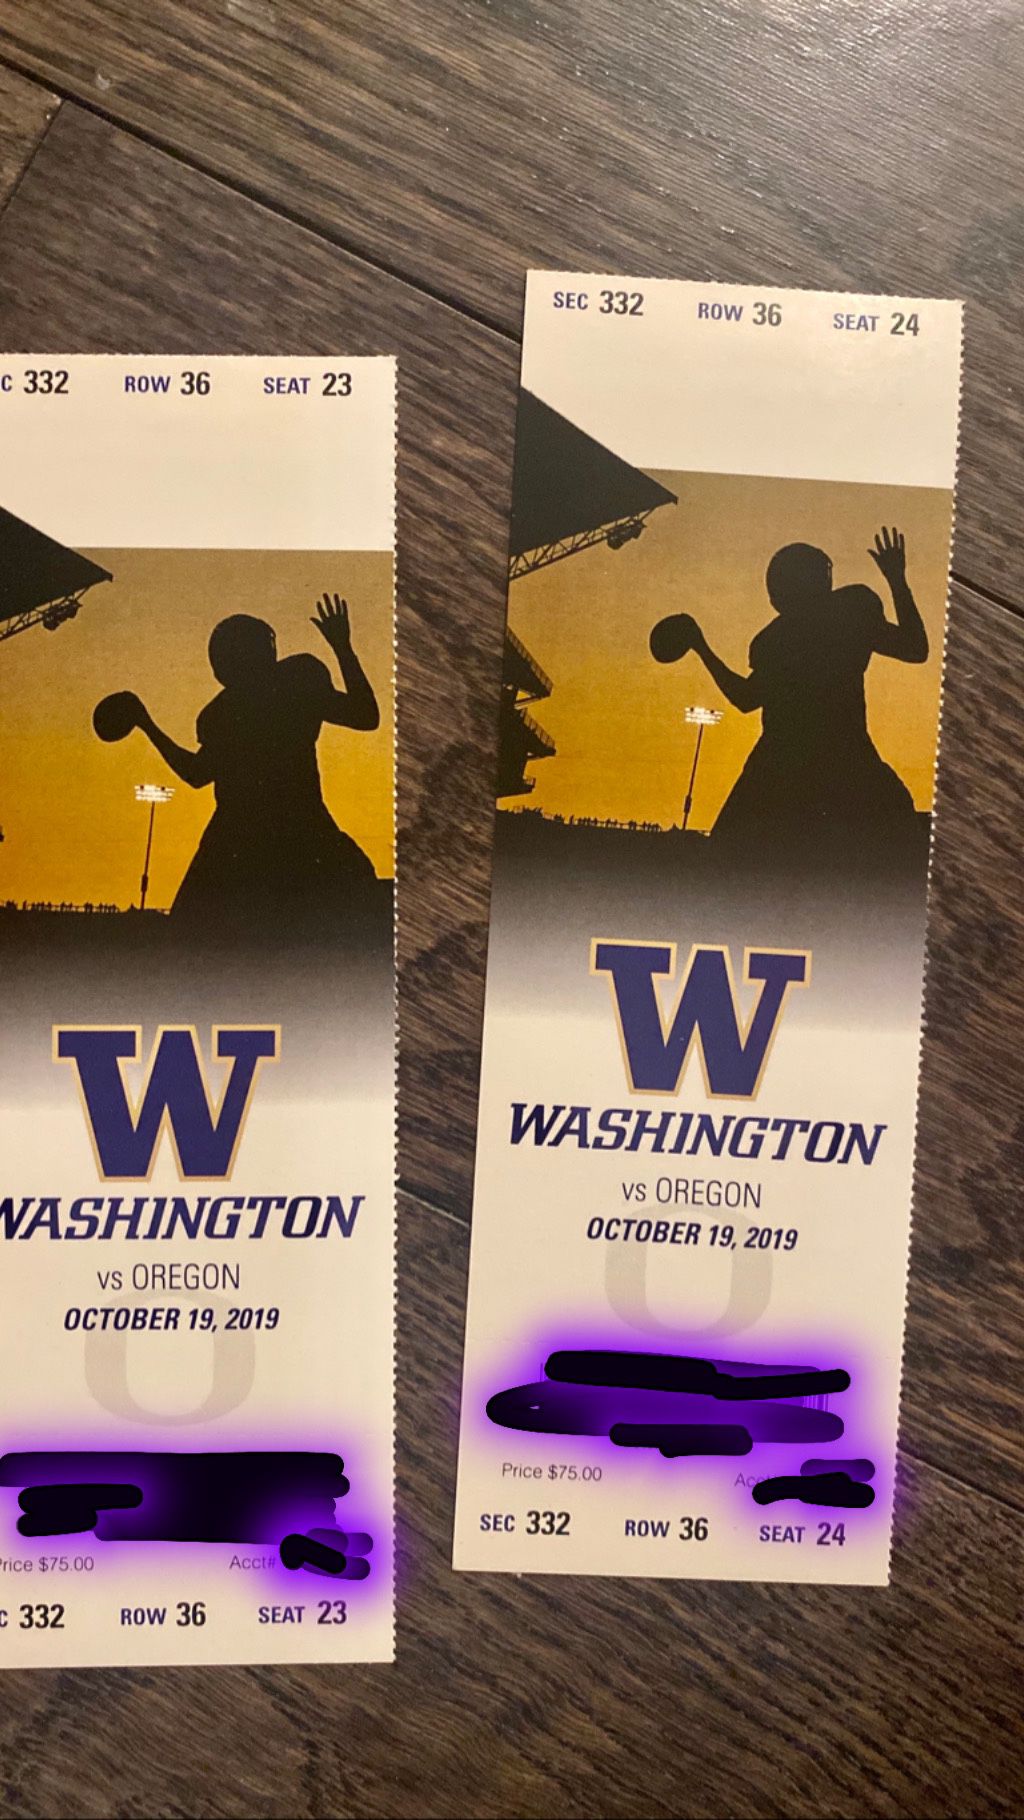 UW vs. Oregon Football Game tickets 10/19 $120 total